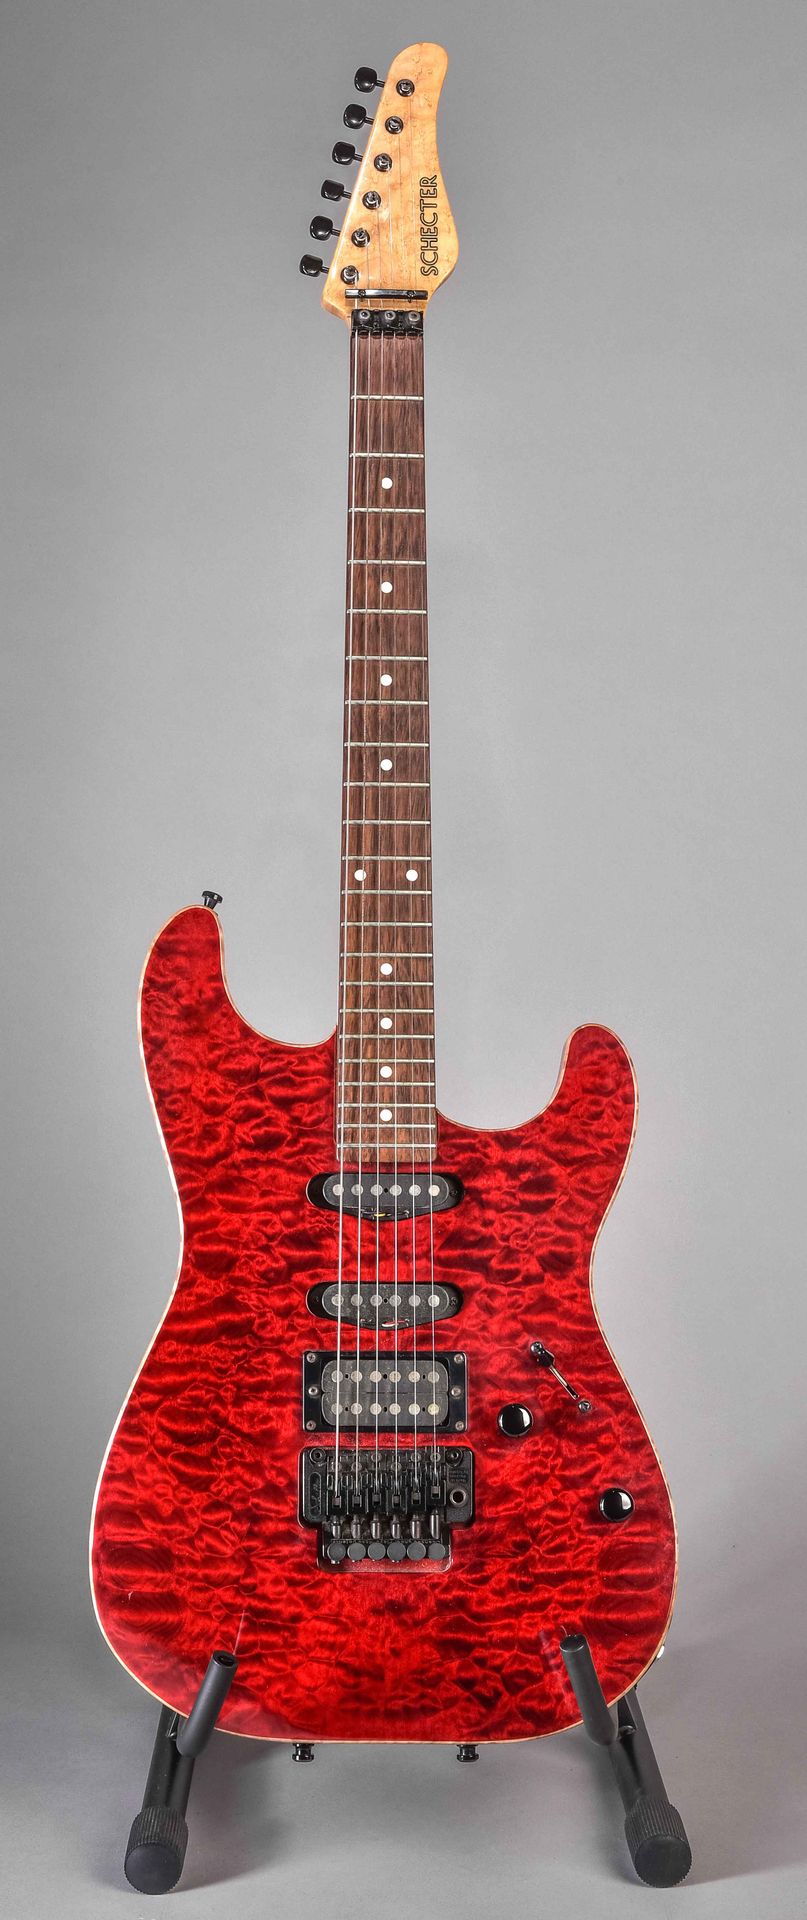 Null Guitare, Schecter, 92275, USA, longueur 97 x 33 cm, étui rigide original